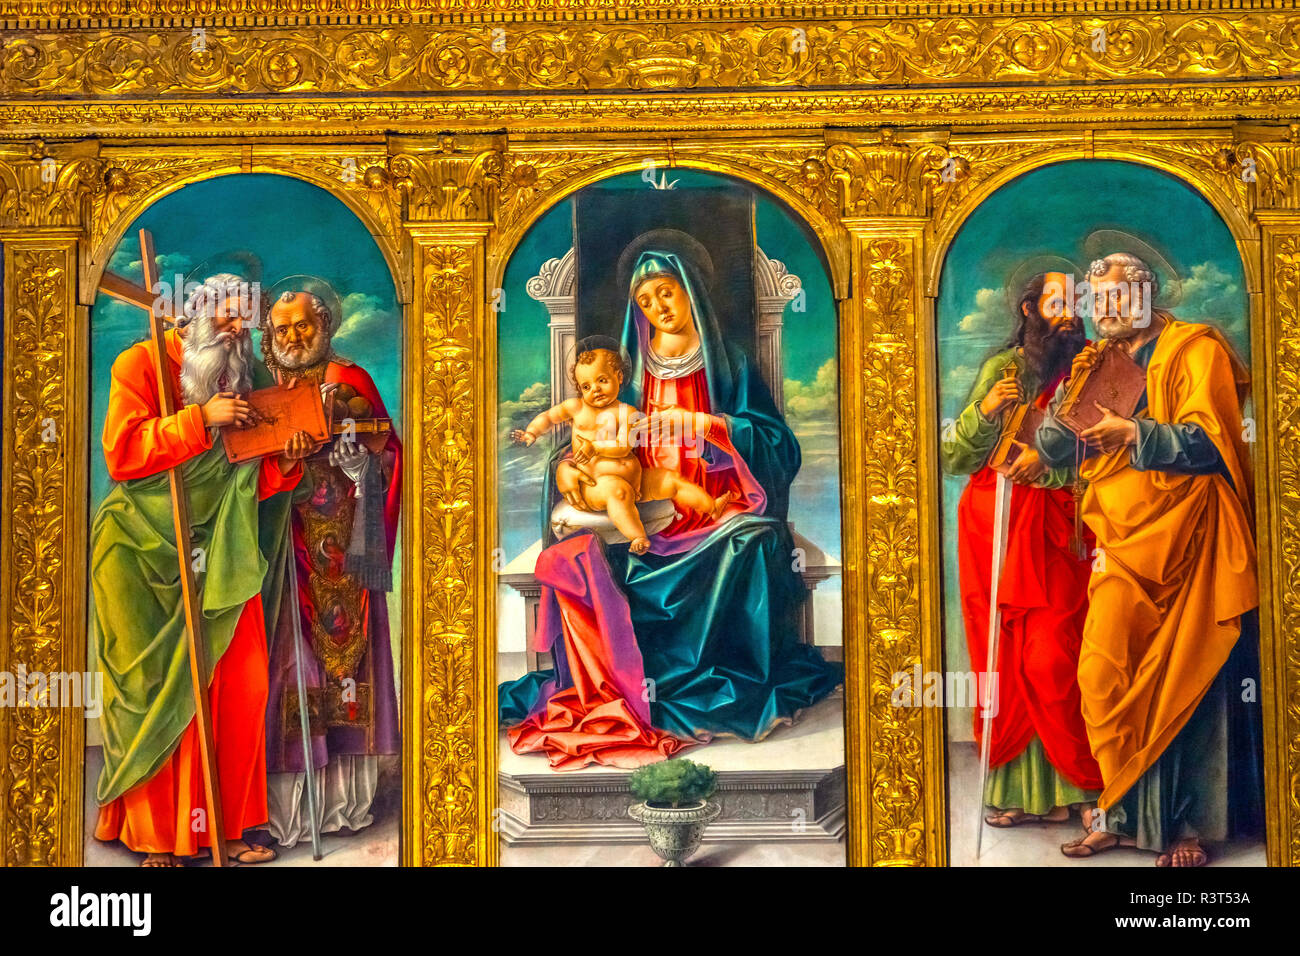 Bartolomeo Vivarini Madonna, Kind und Heiligen Malerei. Santa Maria Gloriosa dei Frari Kirche, San Polo, Venedig, Italien. Kirche abgeschlossen Mitte 1400. Stockfoto